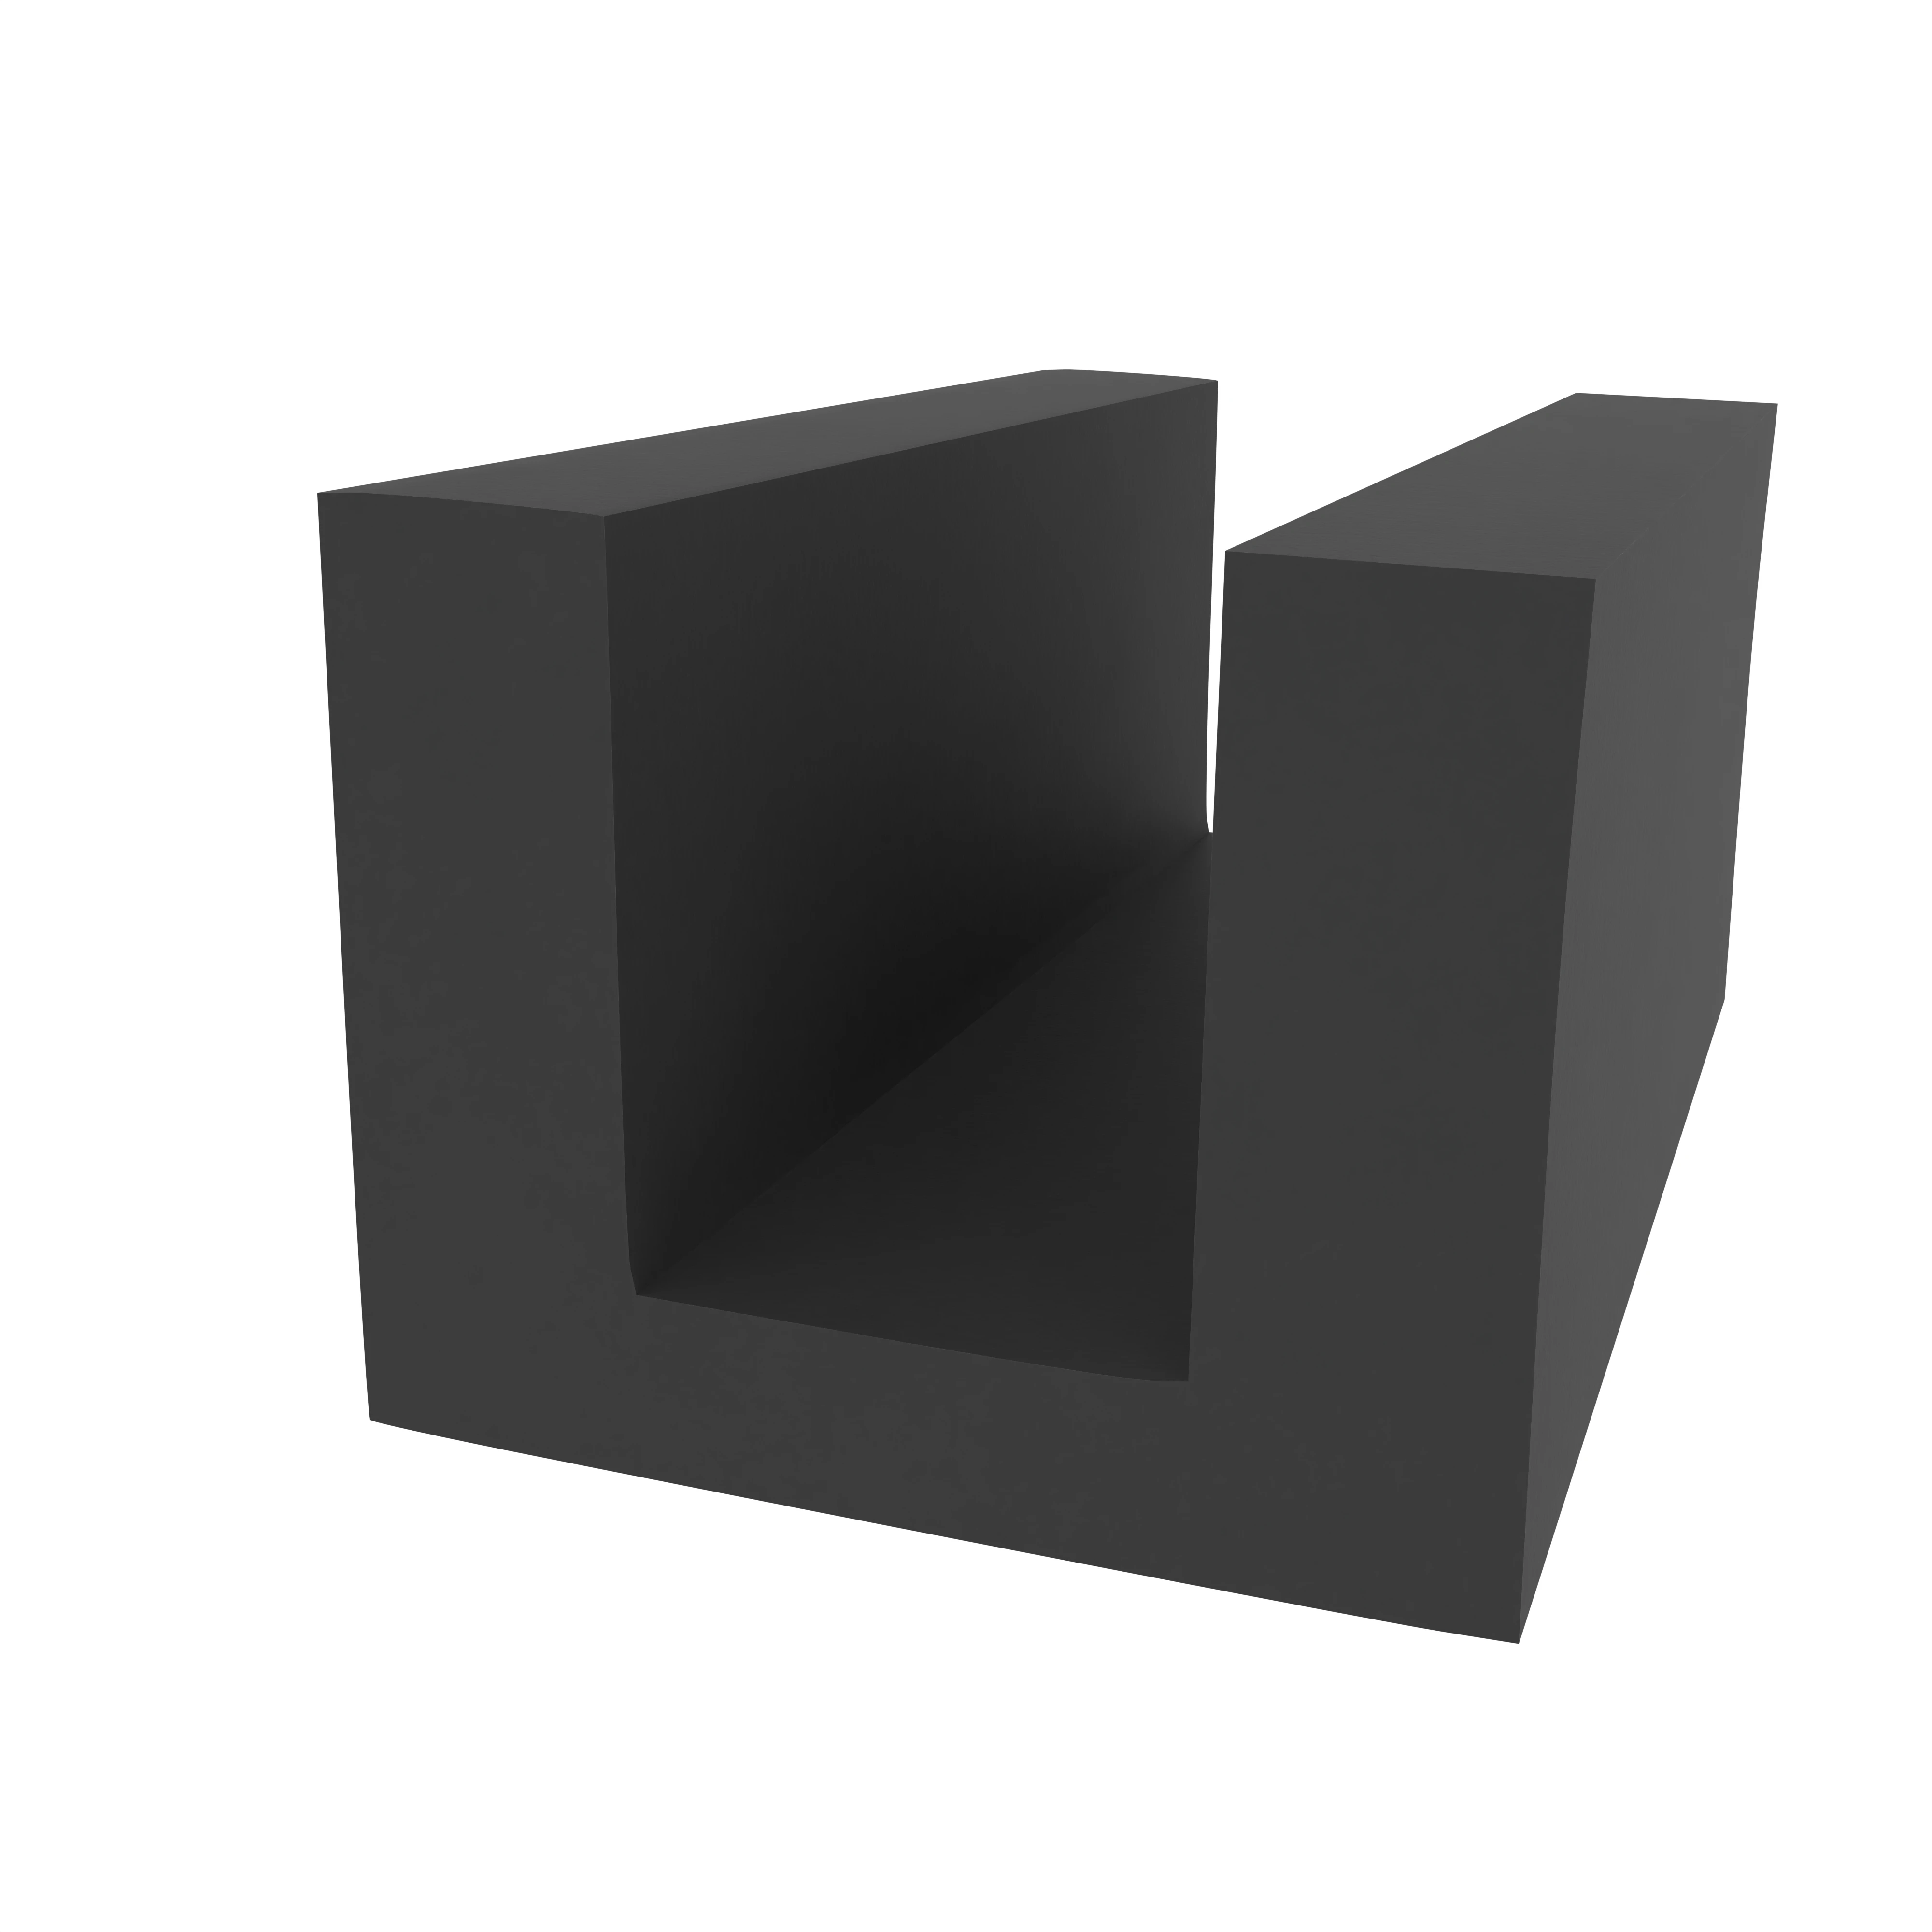 Kantenschutzprofil | Höhe: 10 mm | Farbe: schwarz